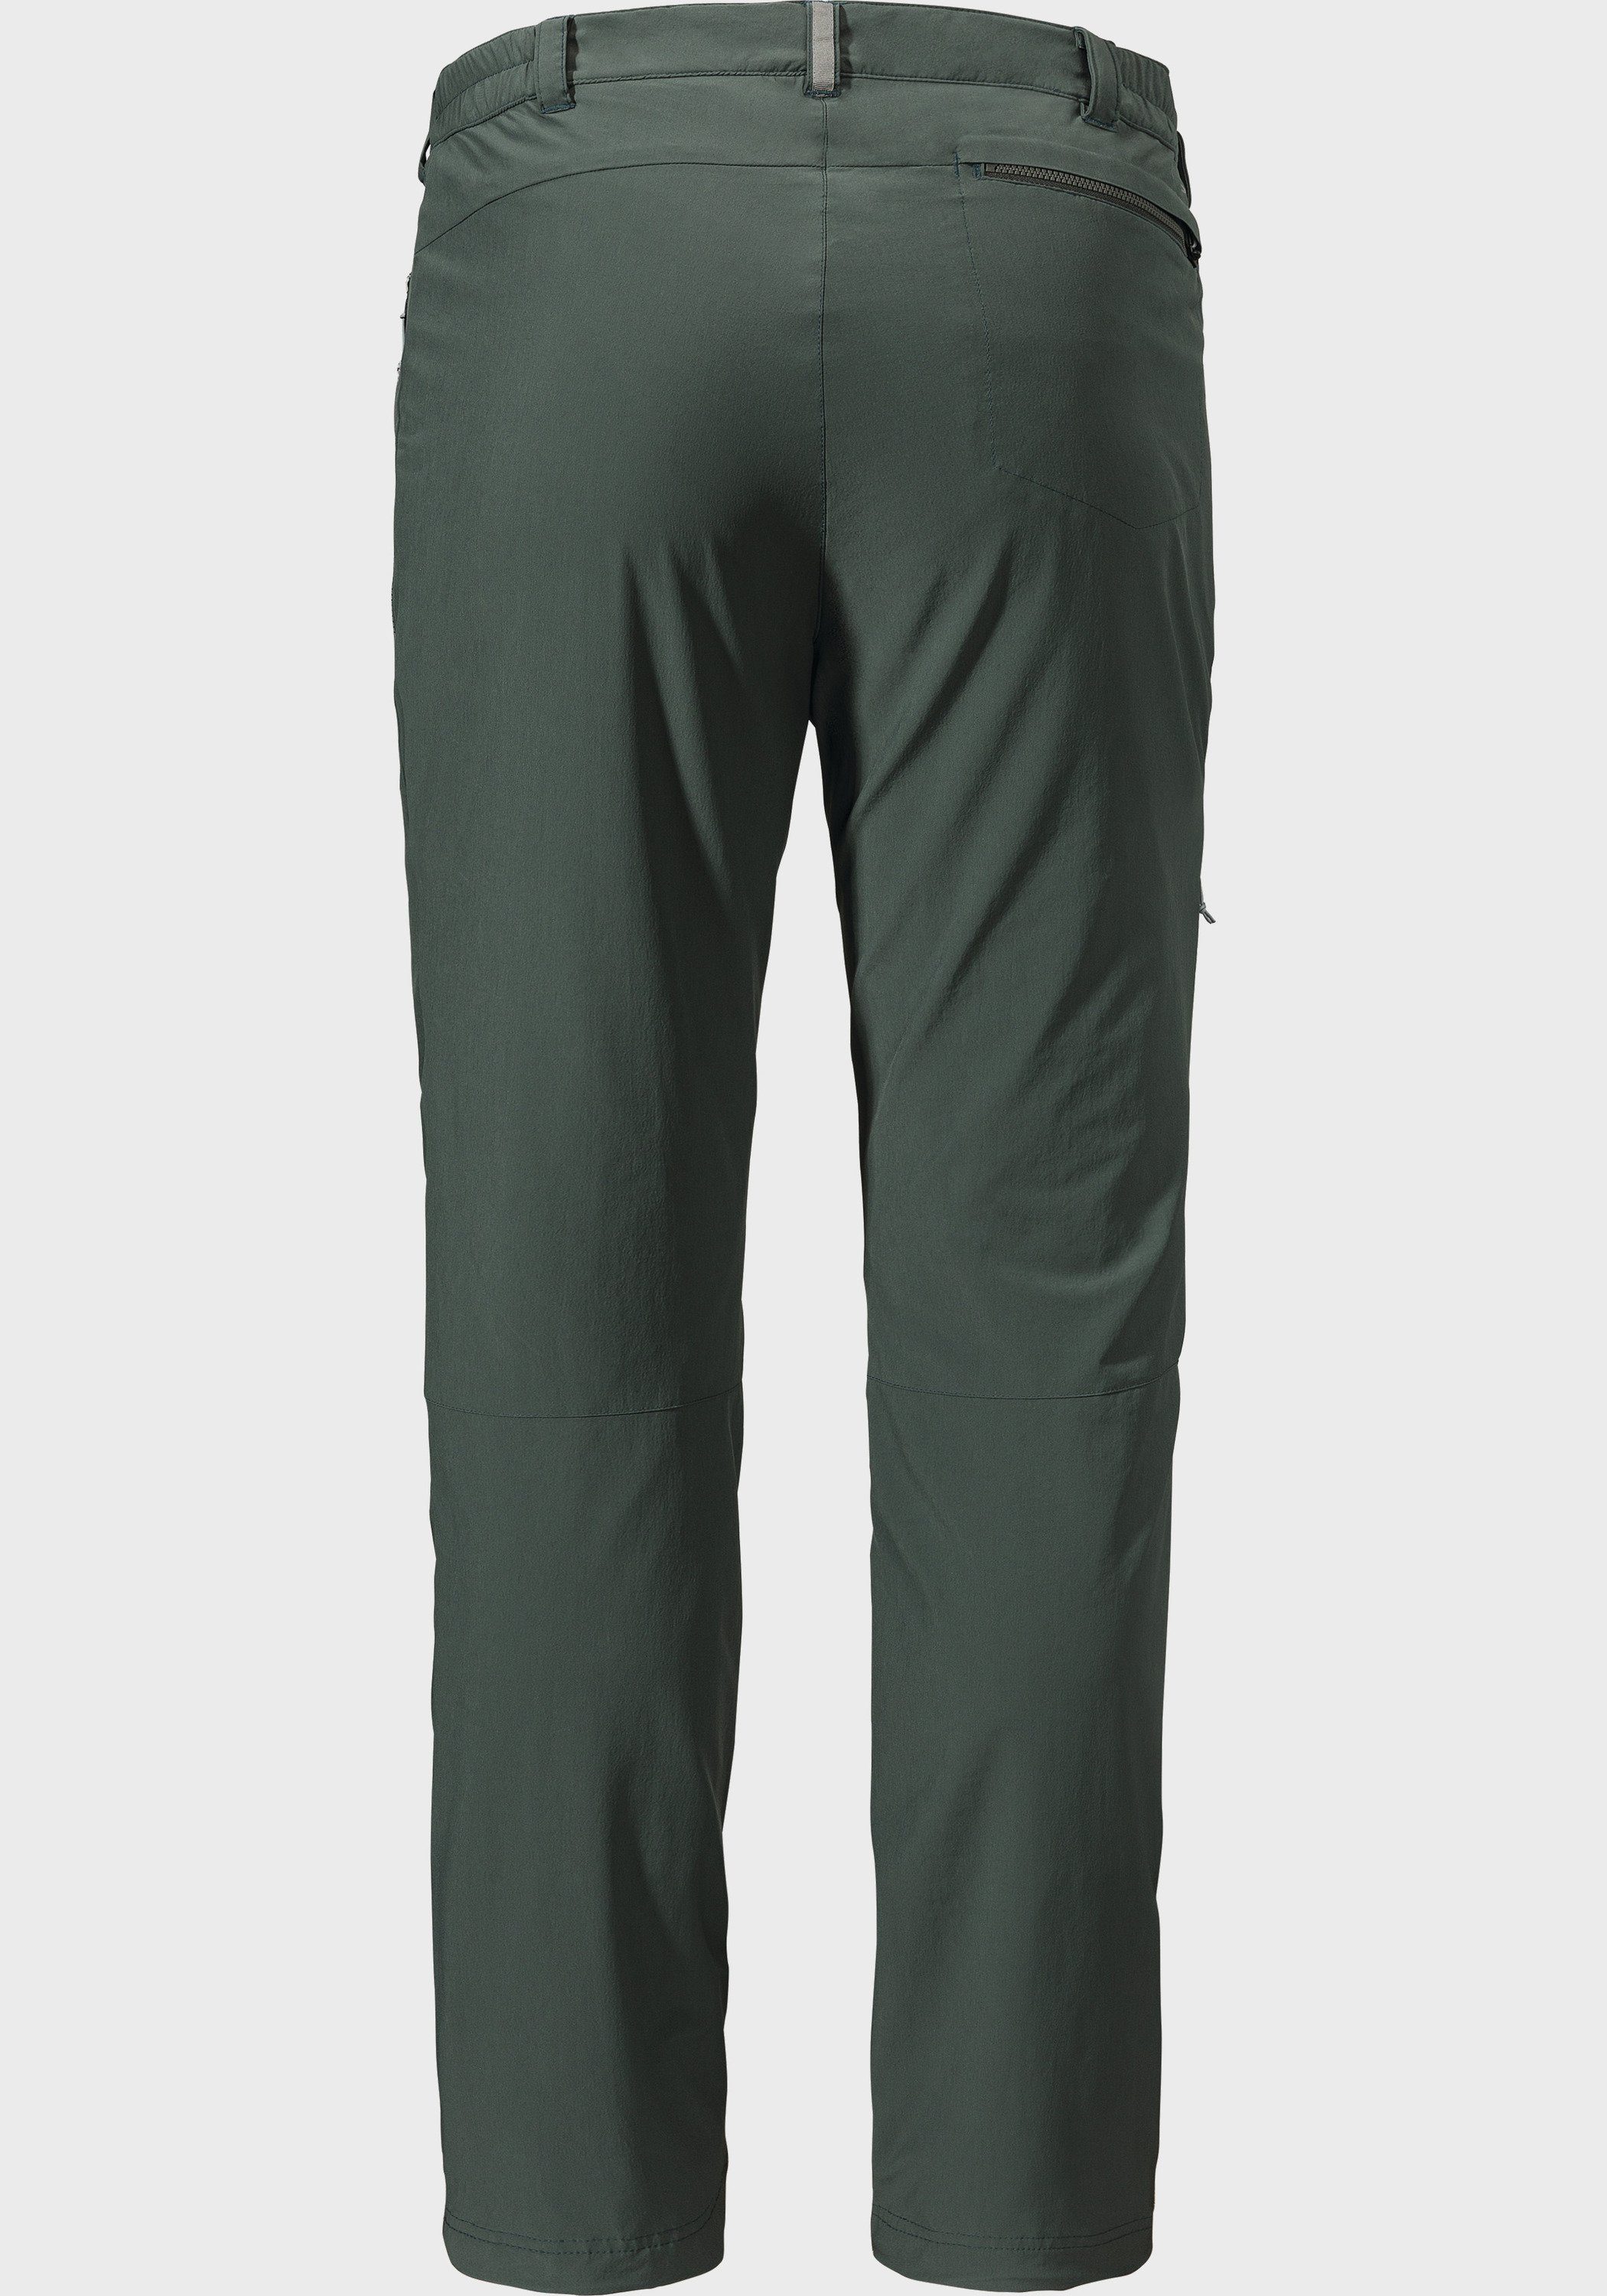 Outdoorhose Pants Warm Koper1 Schöffel M grün